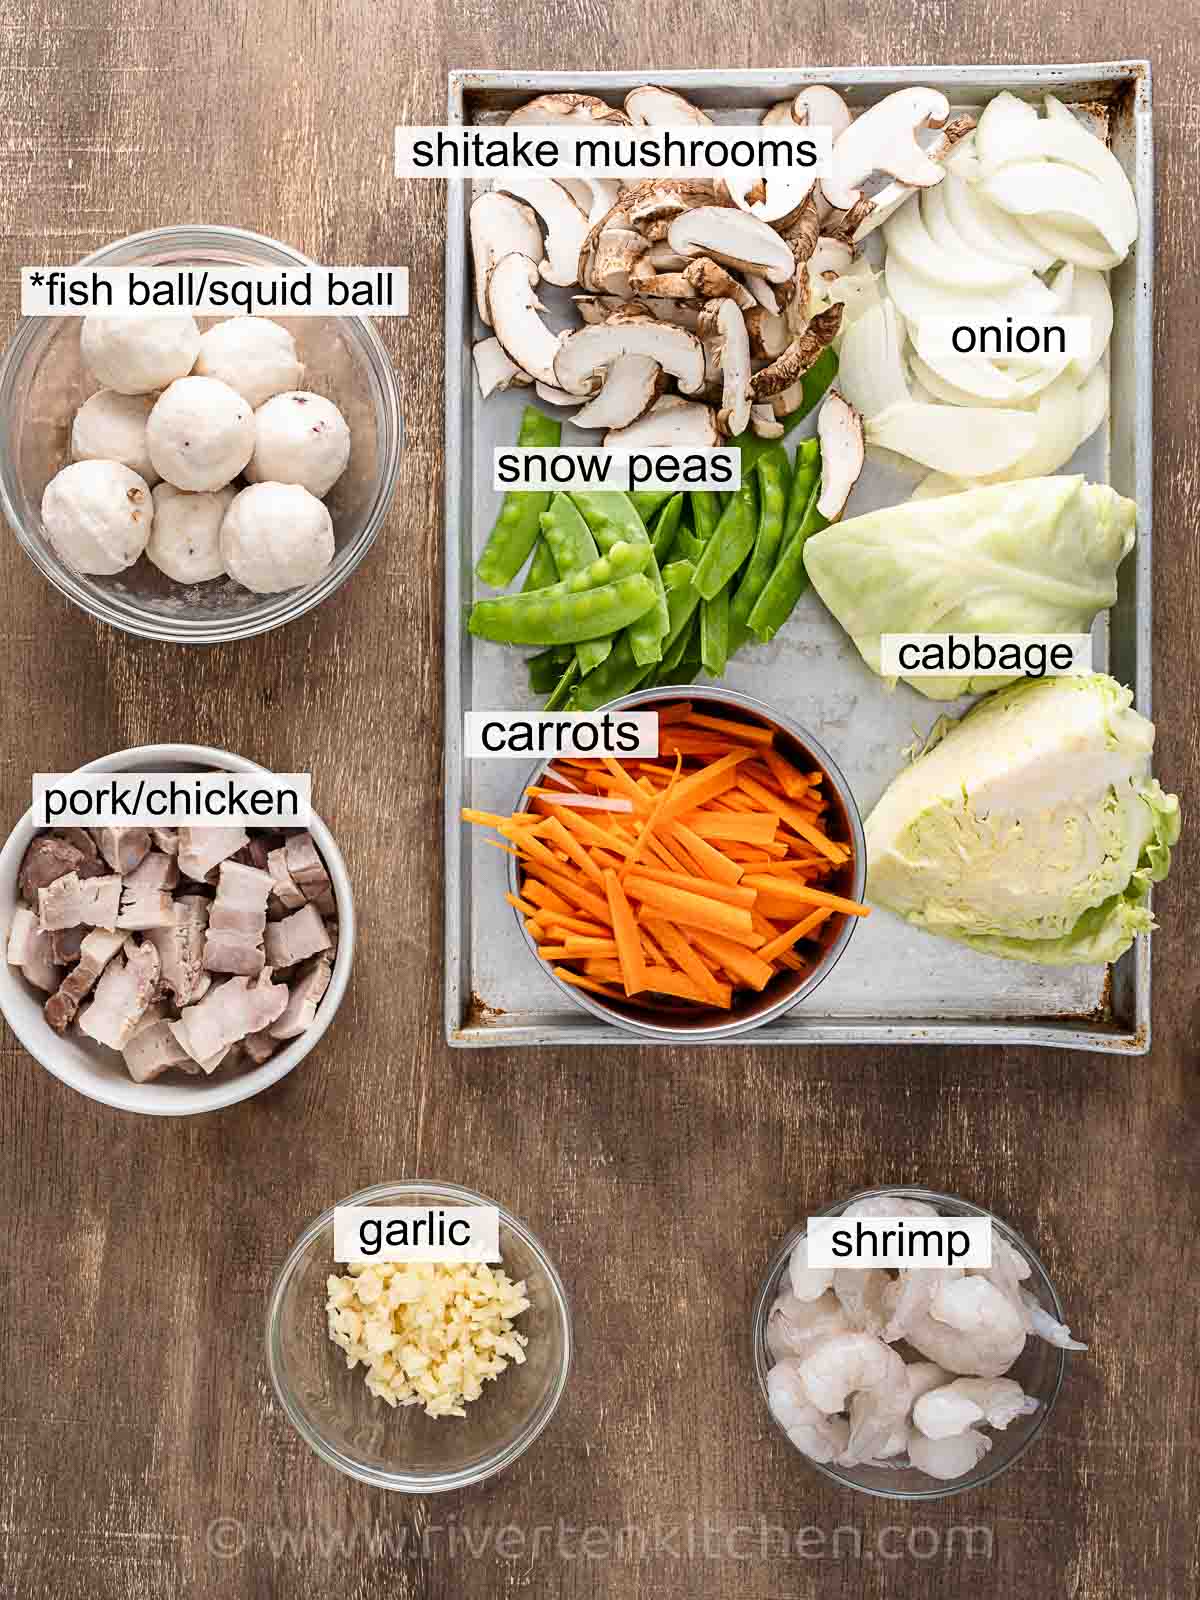 garlic, shrimp, pork, carrots, cabbage, shitake mushrooms, and onion.